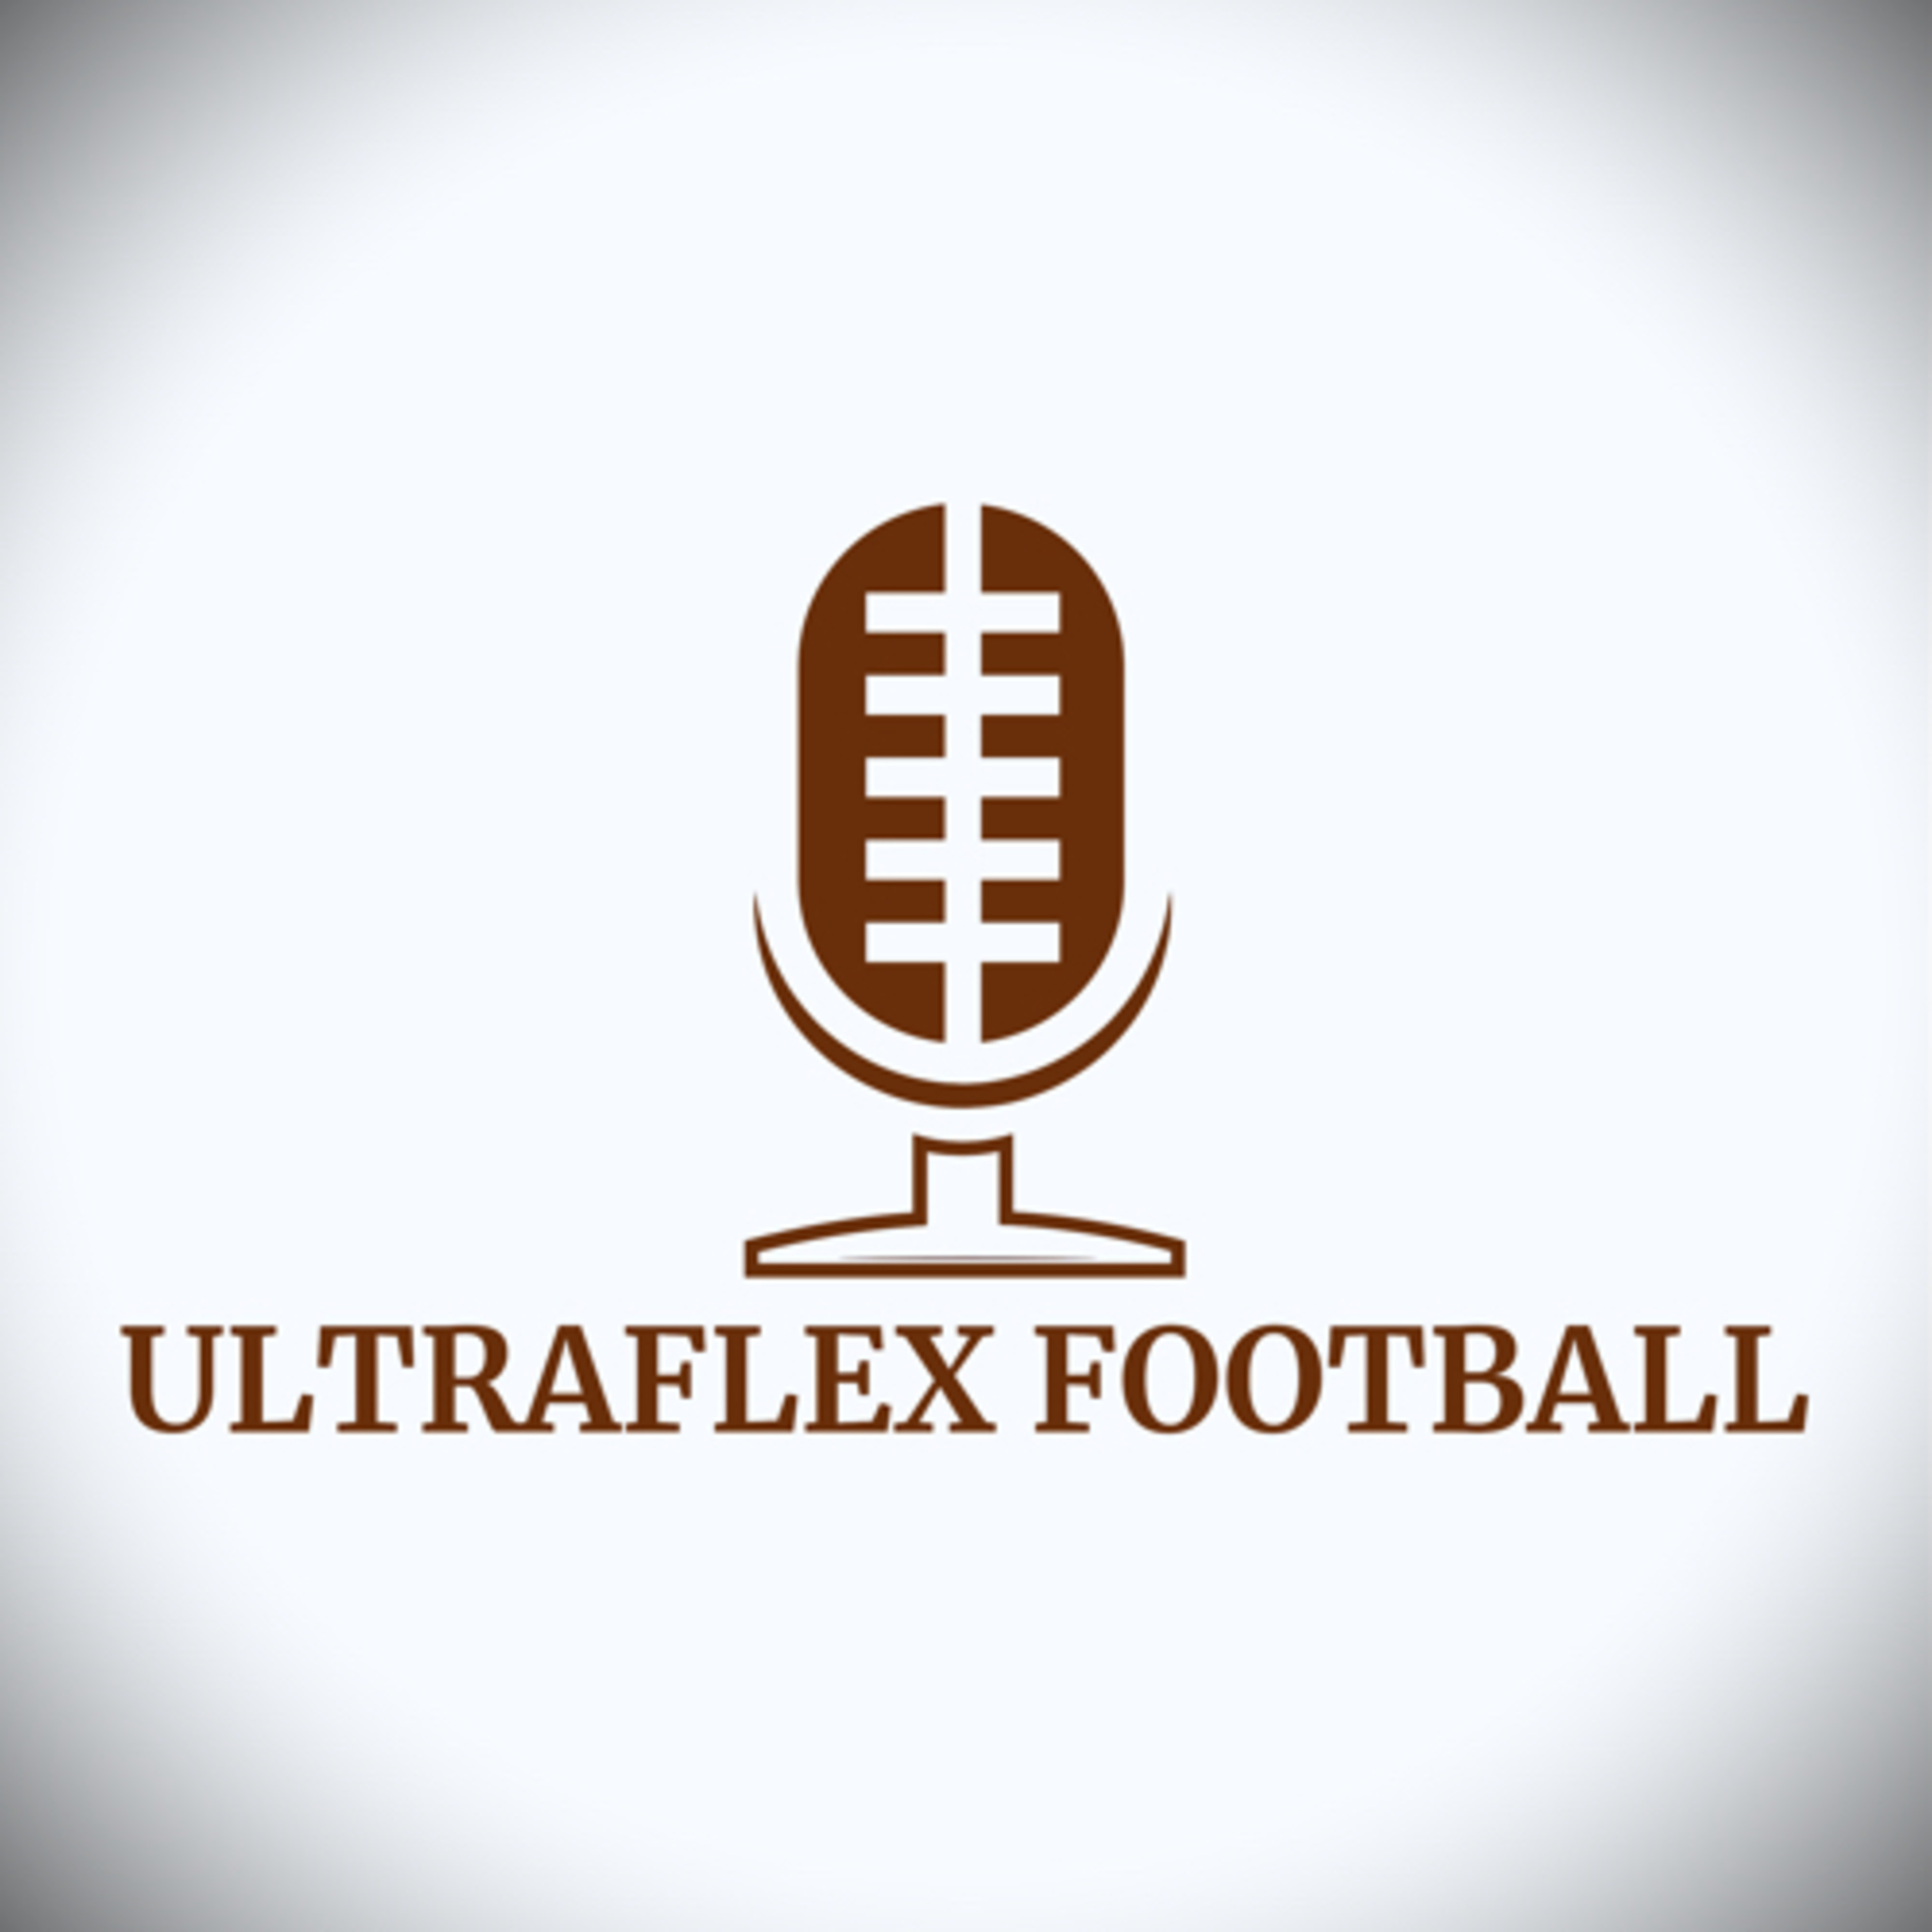 Fresh update on "v wade" discussed on Ultraflex Football